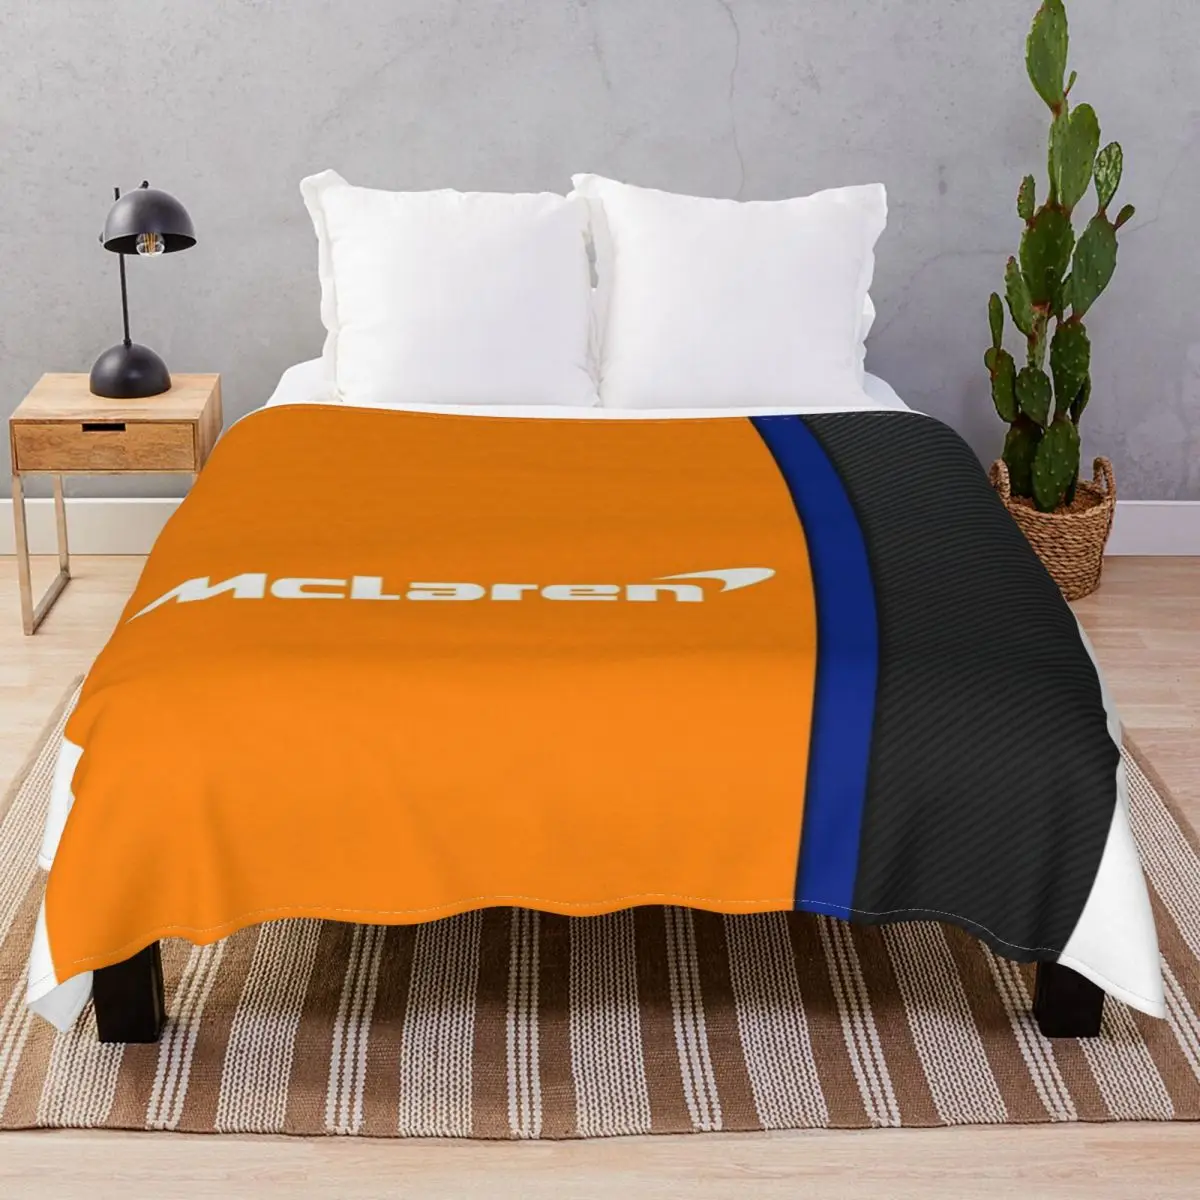 Mclaren F1 Logo Blankets Coral Fleece Print Super Soft Throw Blanket for Bedding Sofa Travel Office